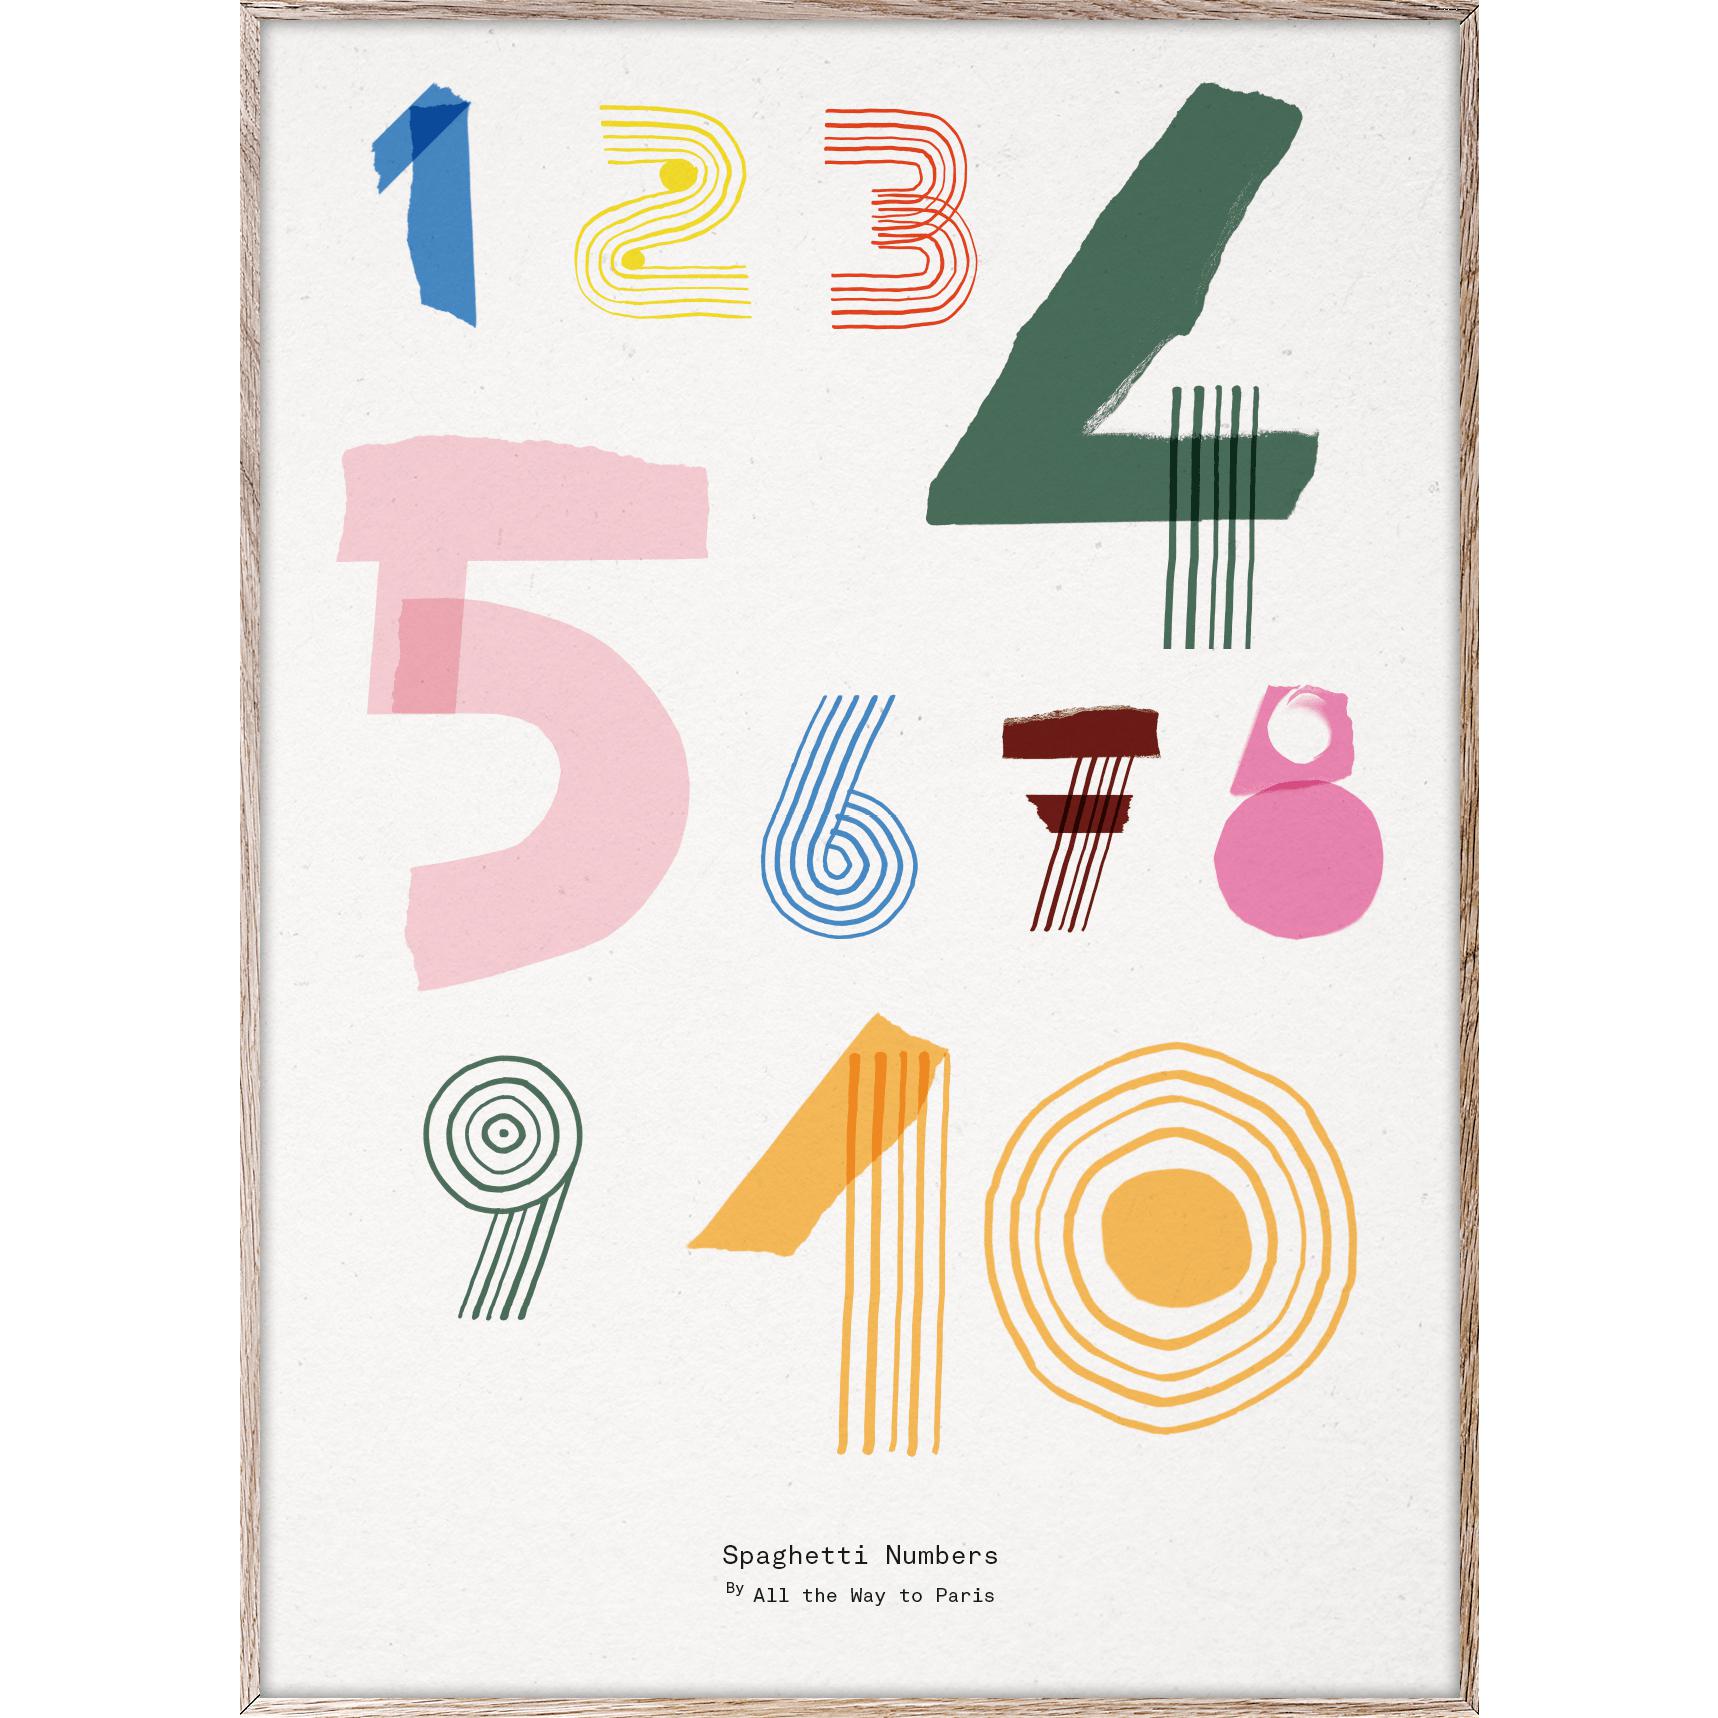 Papiercollectief spaghetti -nummer poster, 50x70 cm